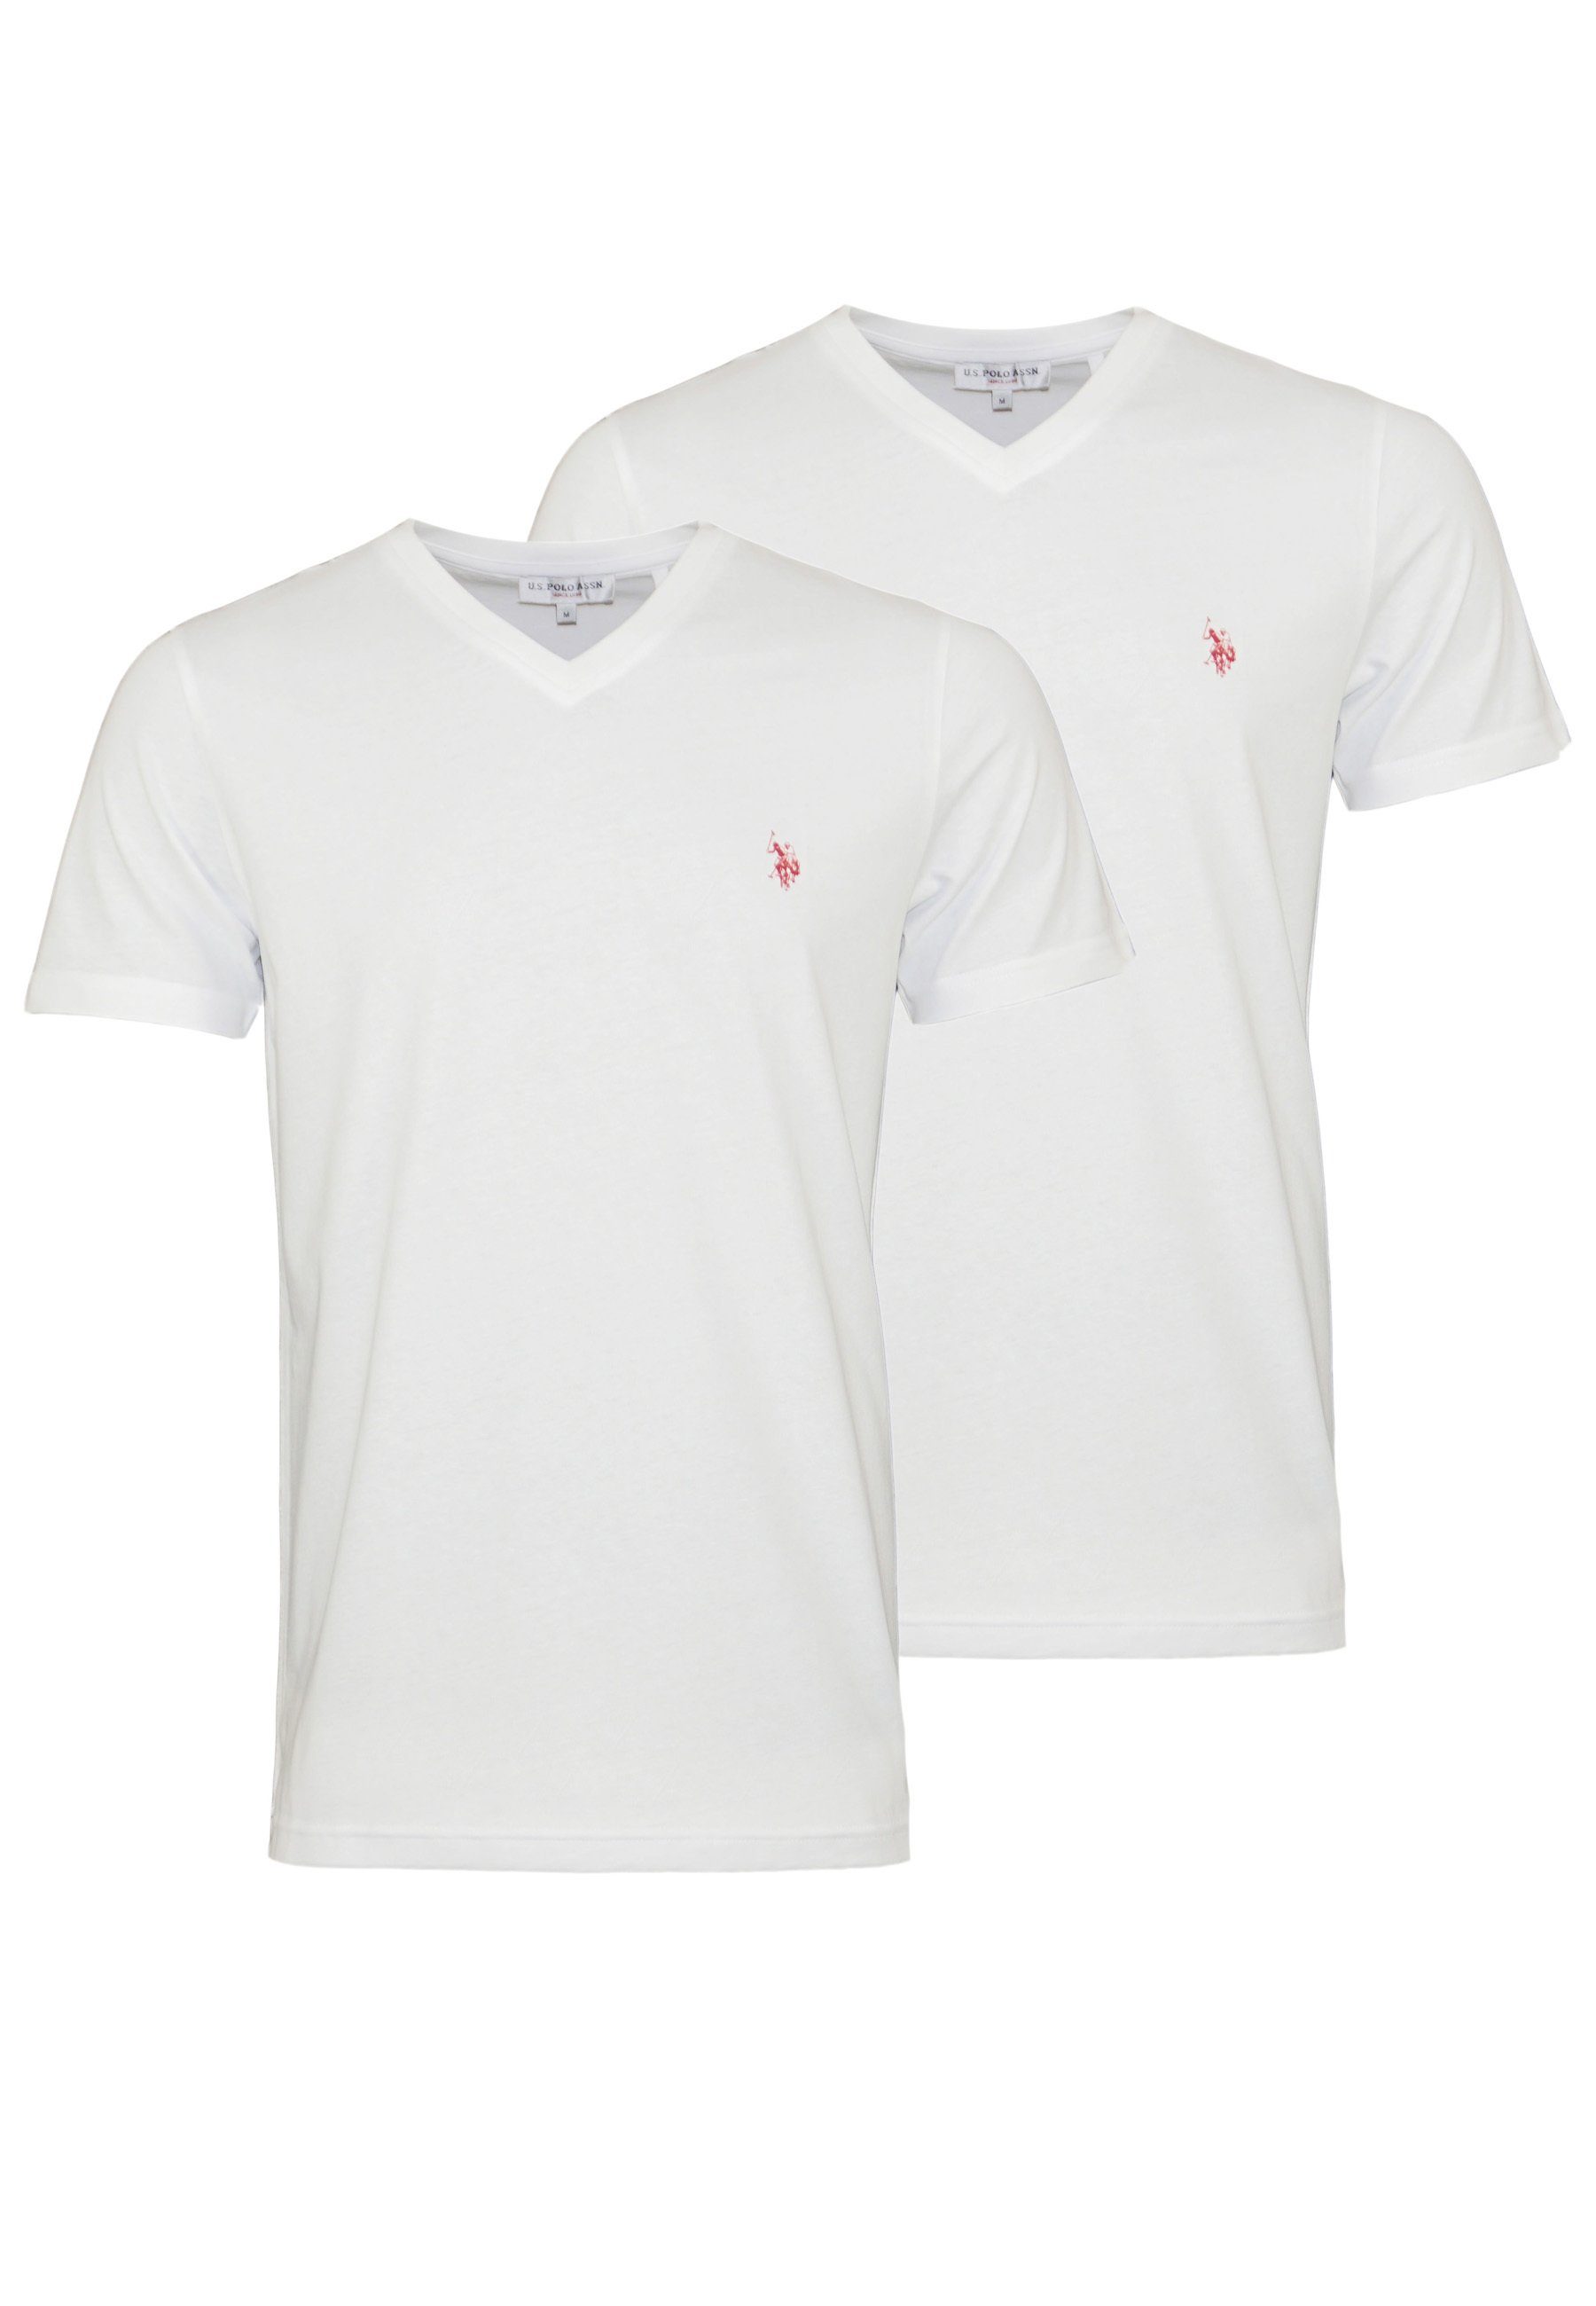 U.S. Polo Assn T-Shirt Shirts 2er Pack V-Neck T-Shirts